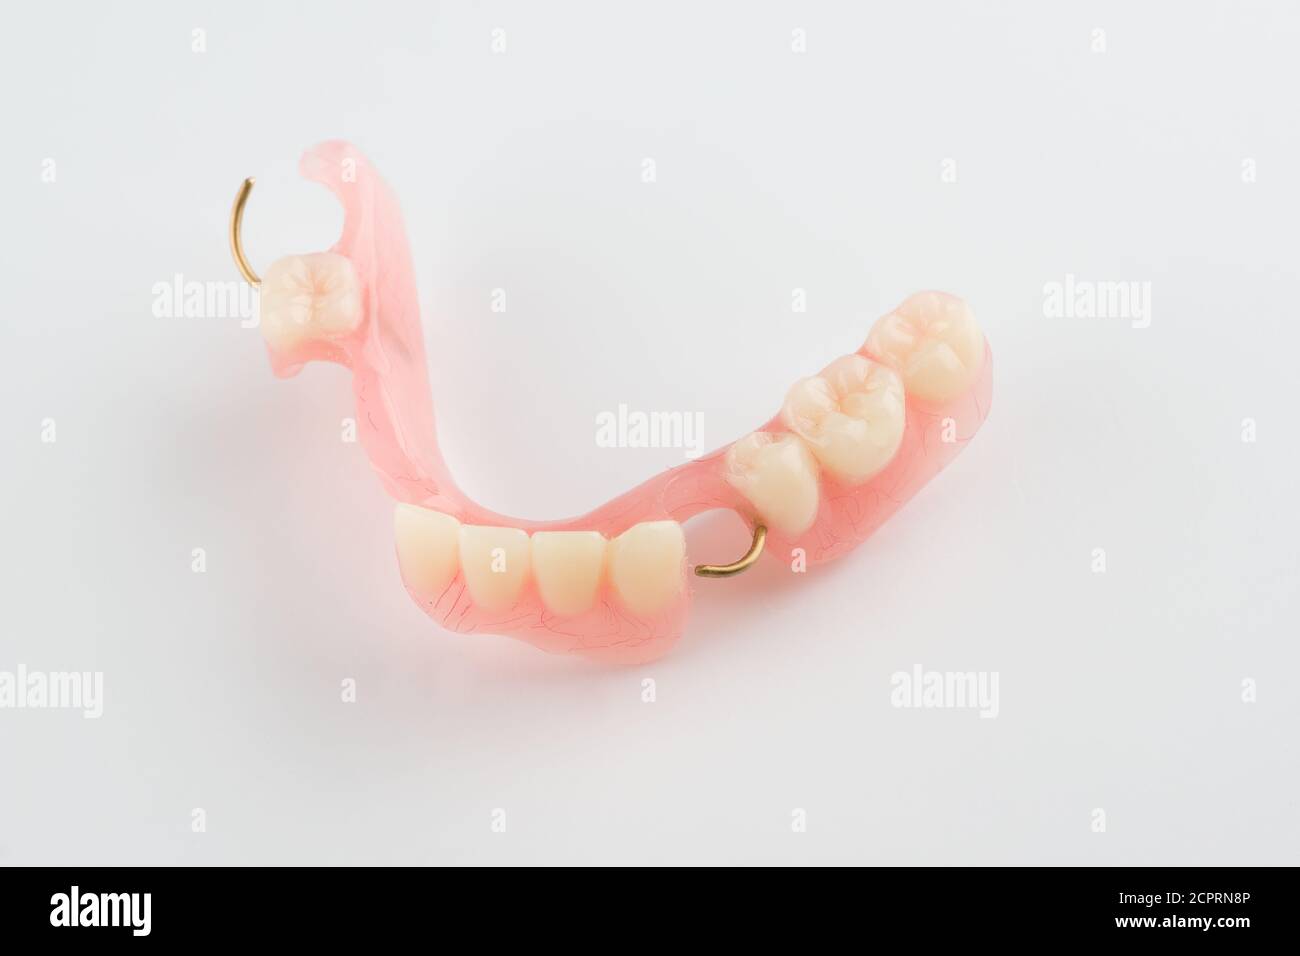 acrylic dental prosthesis with metal retaining elements Stock Photo